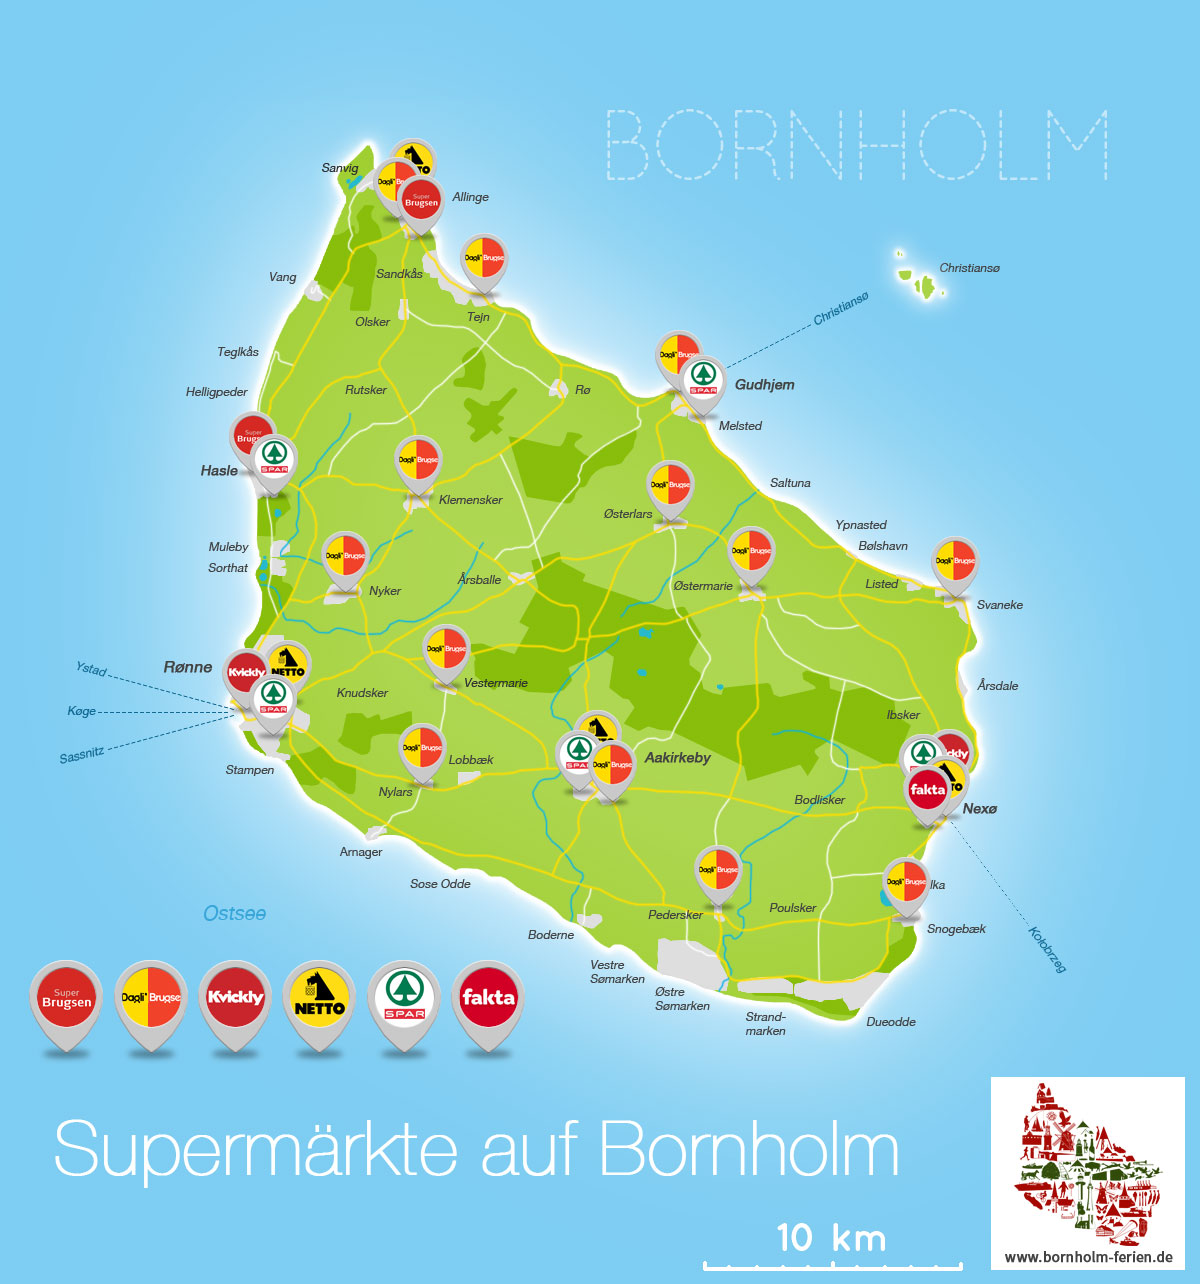 Supermärkte Insel Bornholm (Dänemark) - Einkaufen auf Bornholm